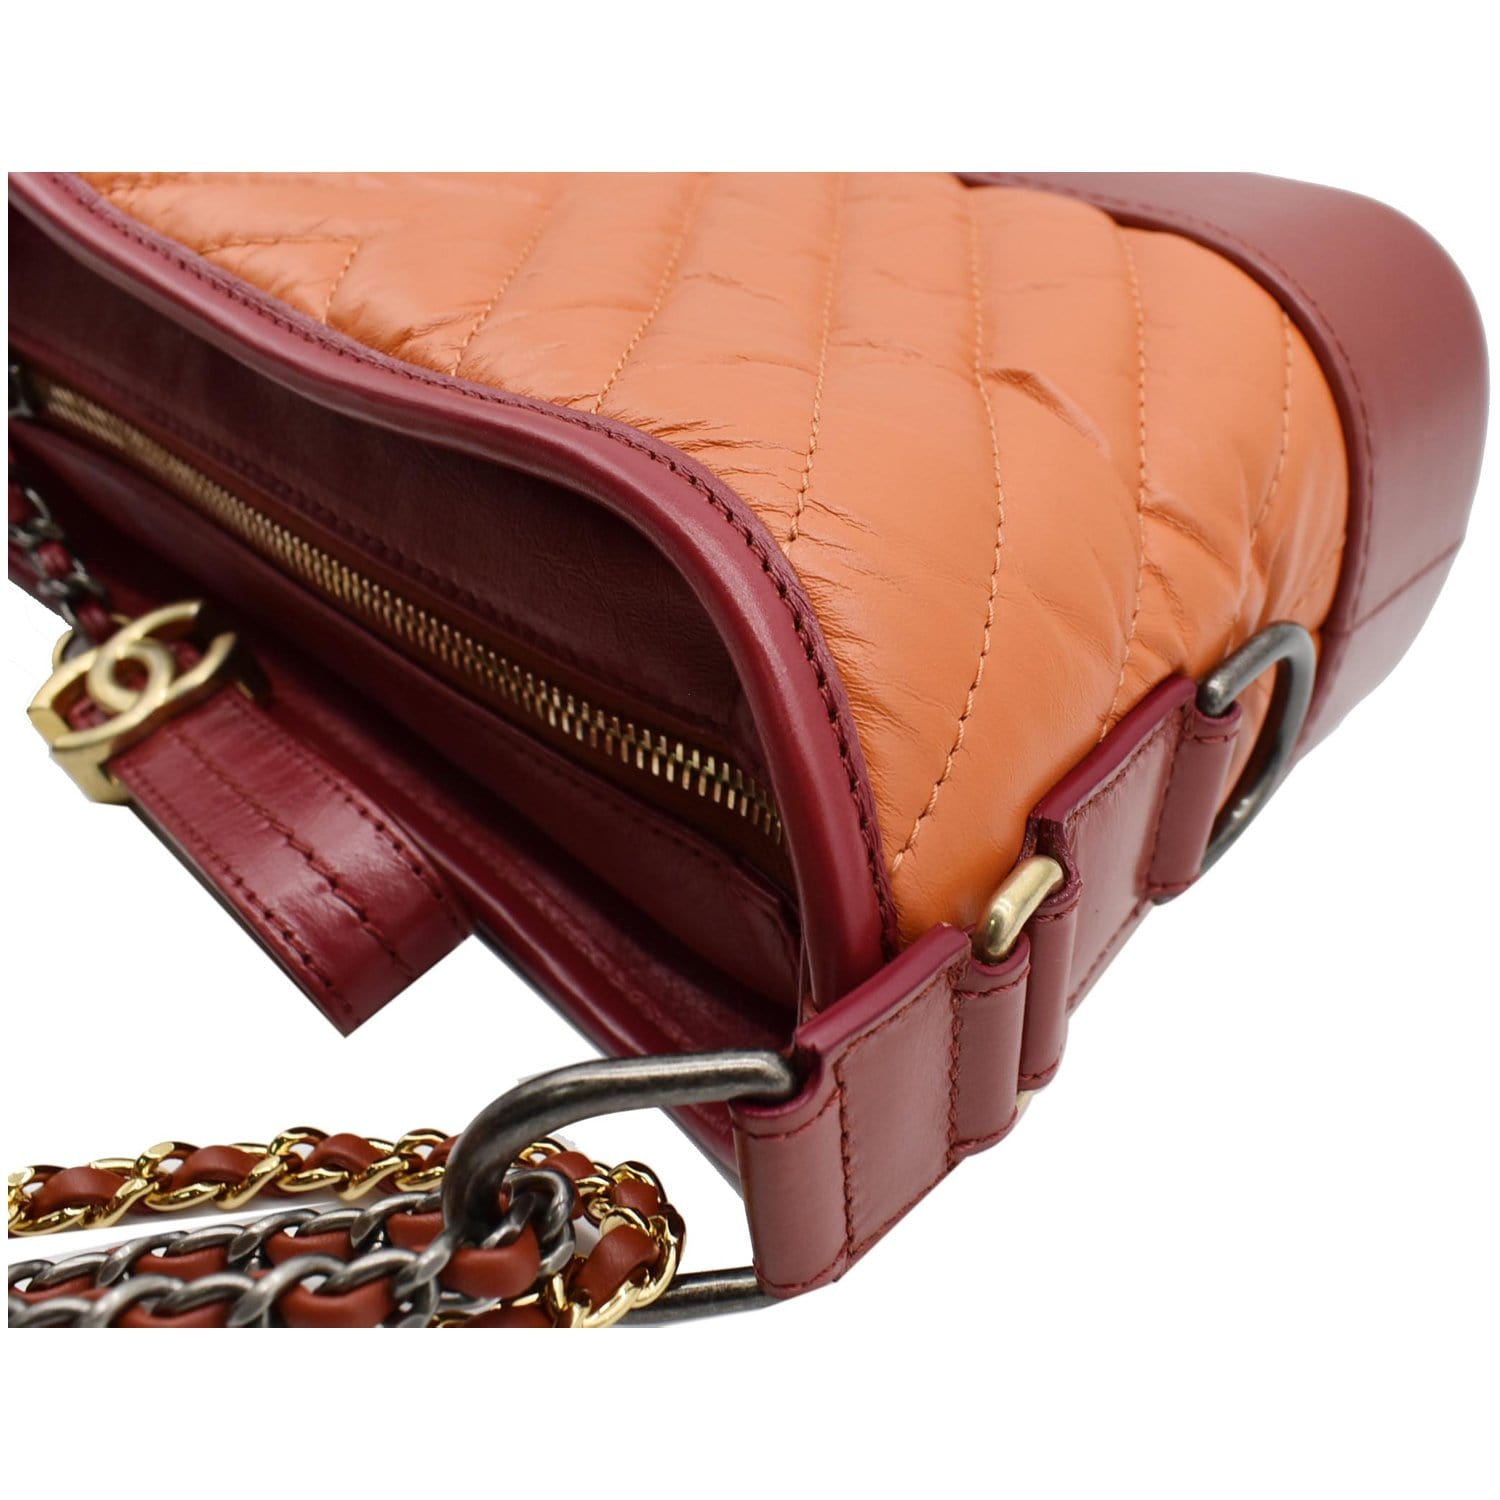 CHANEL Gabrielle Small Aged Leather Hobo Crossbody Bag Orange